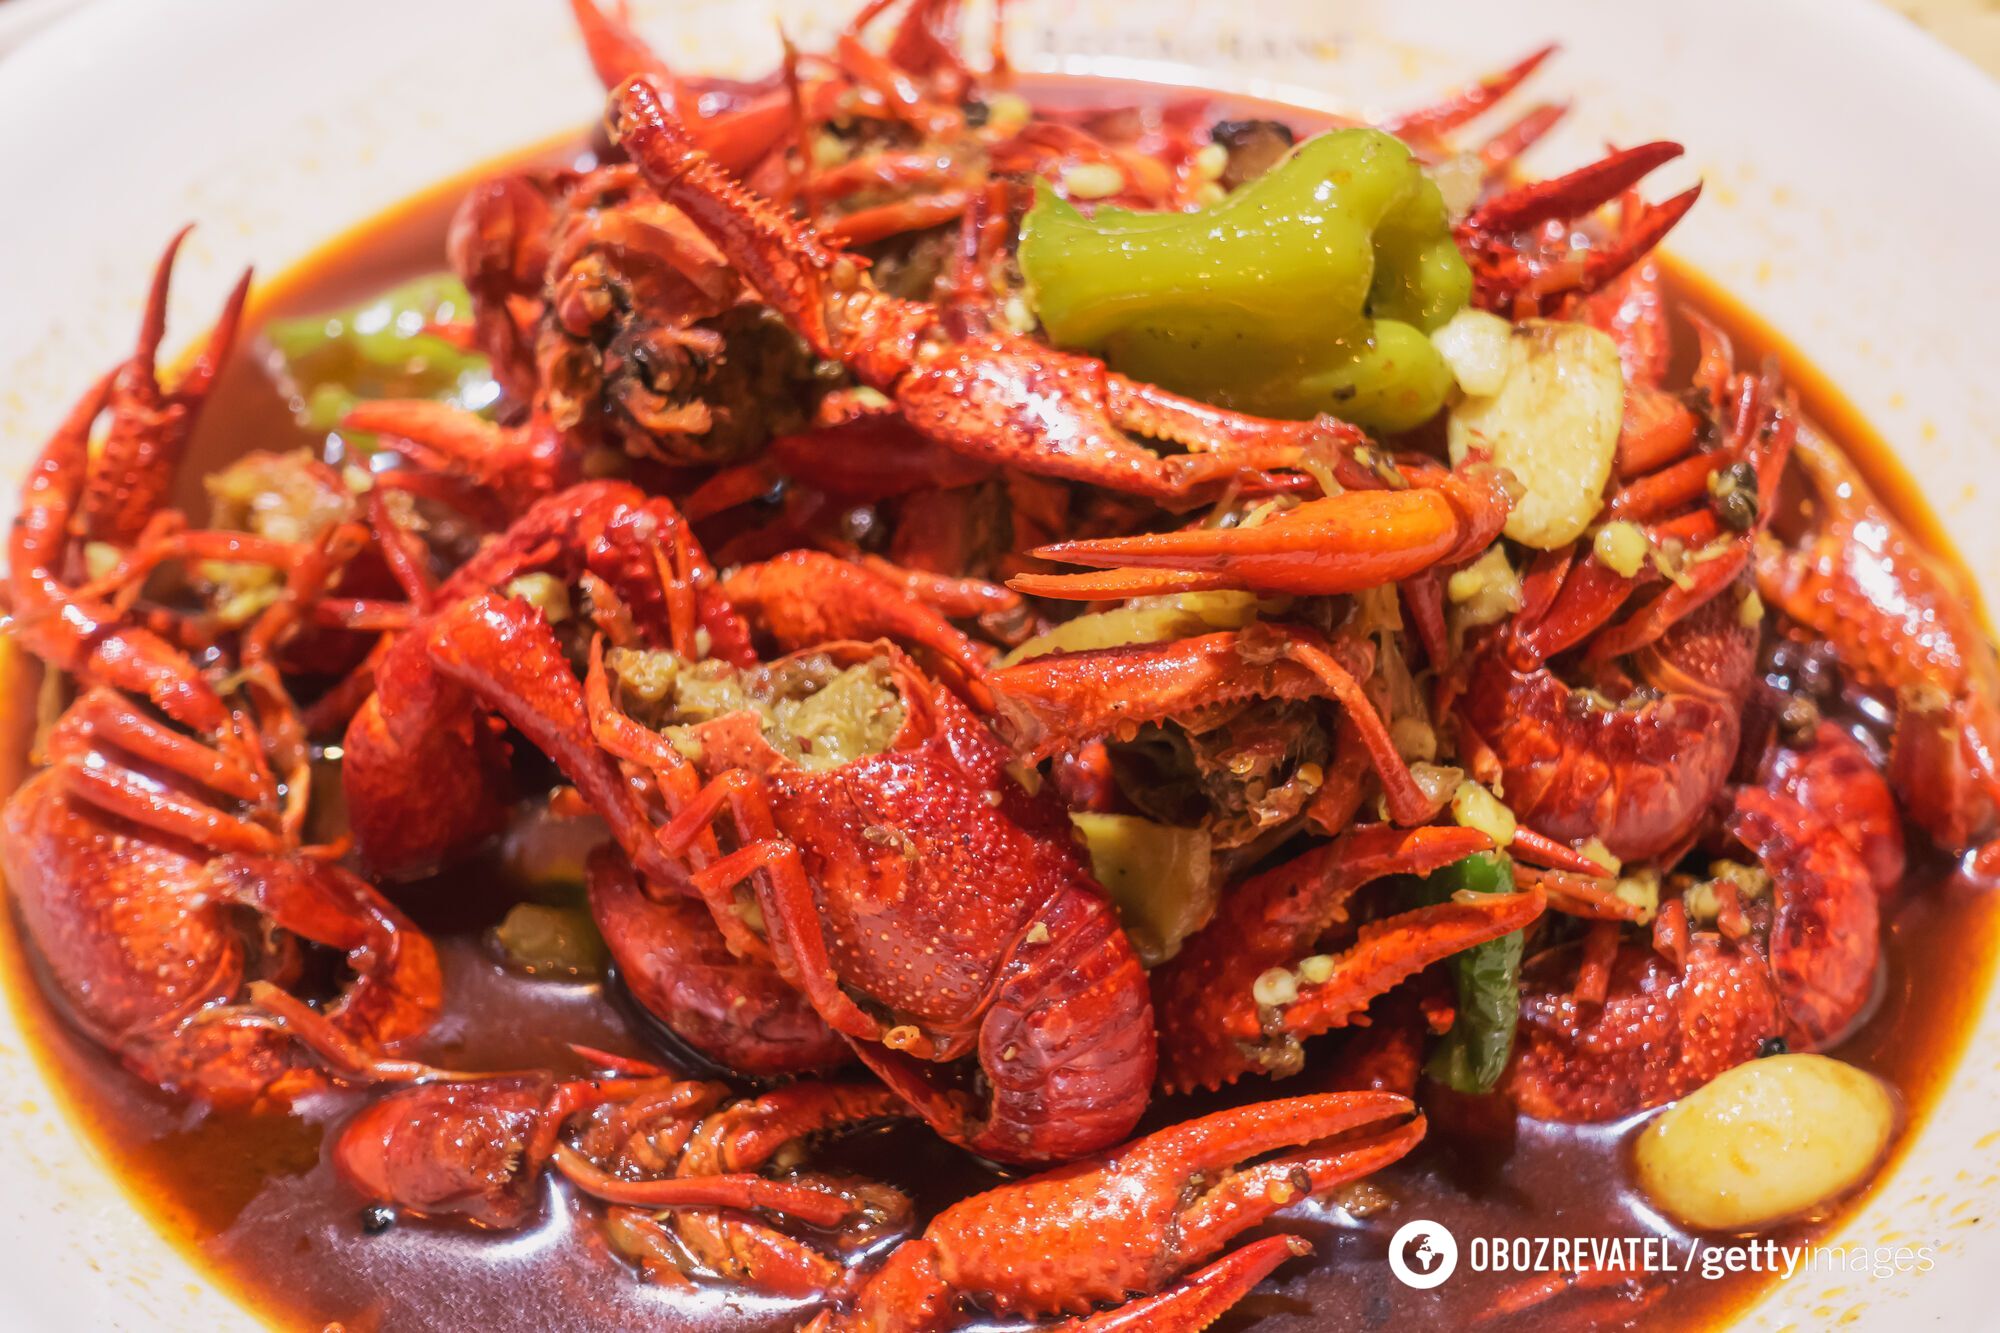 Recipe for delicious crayfish